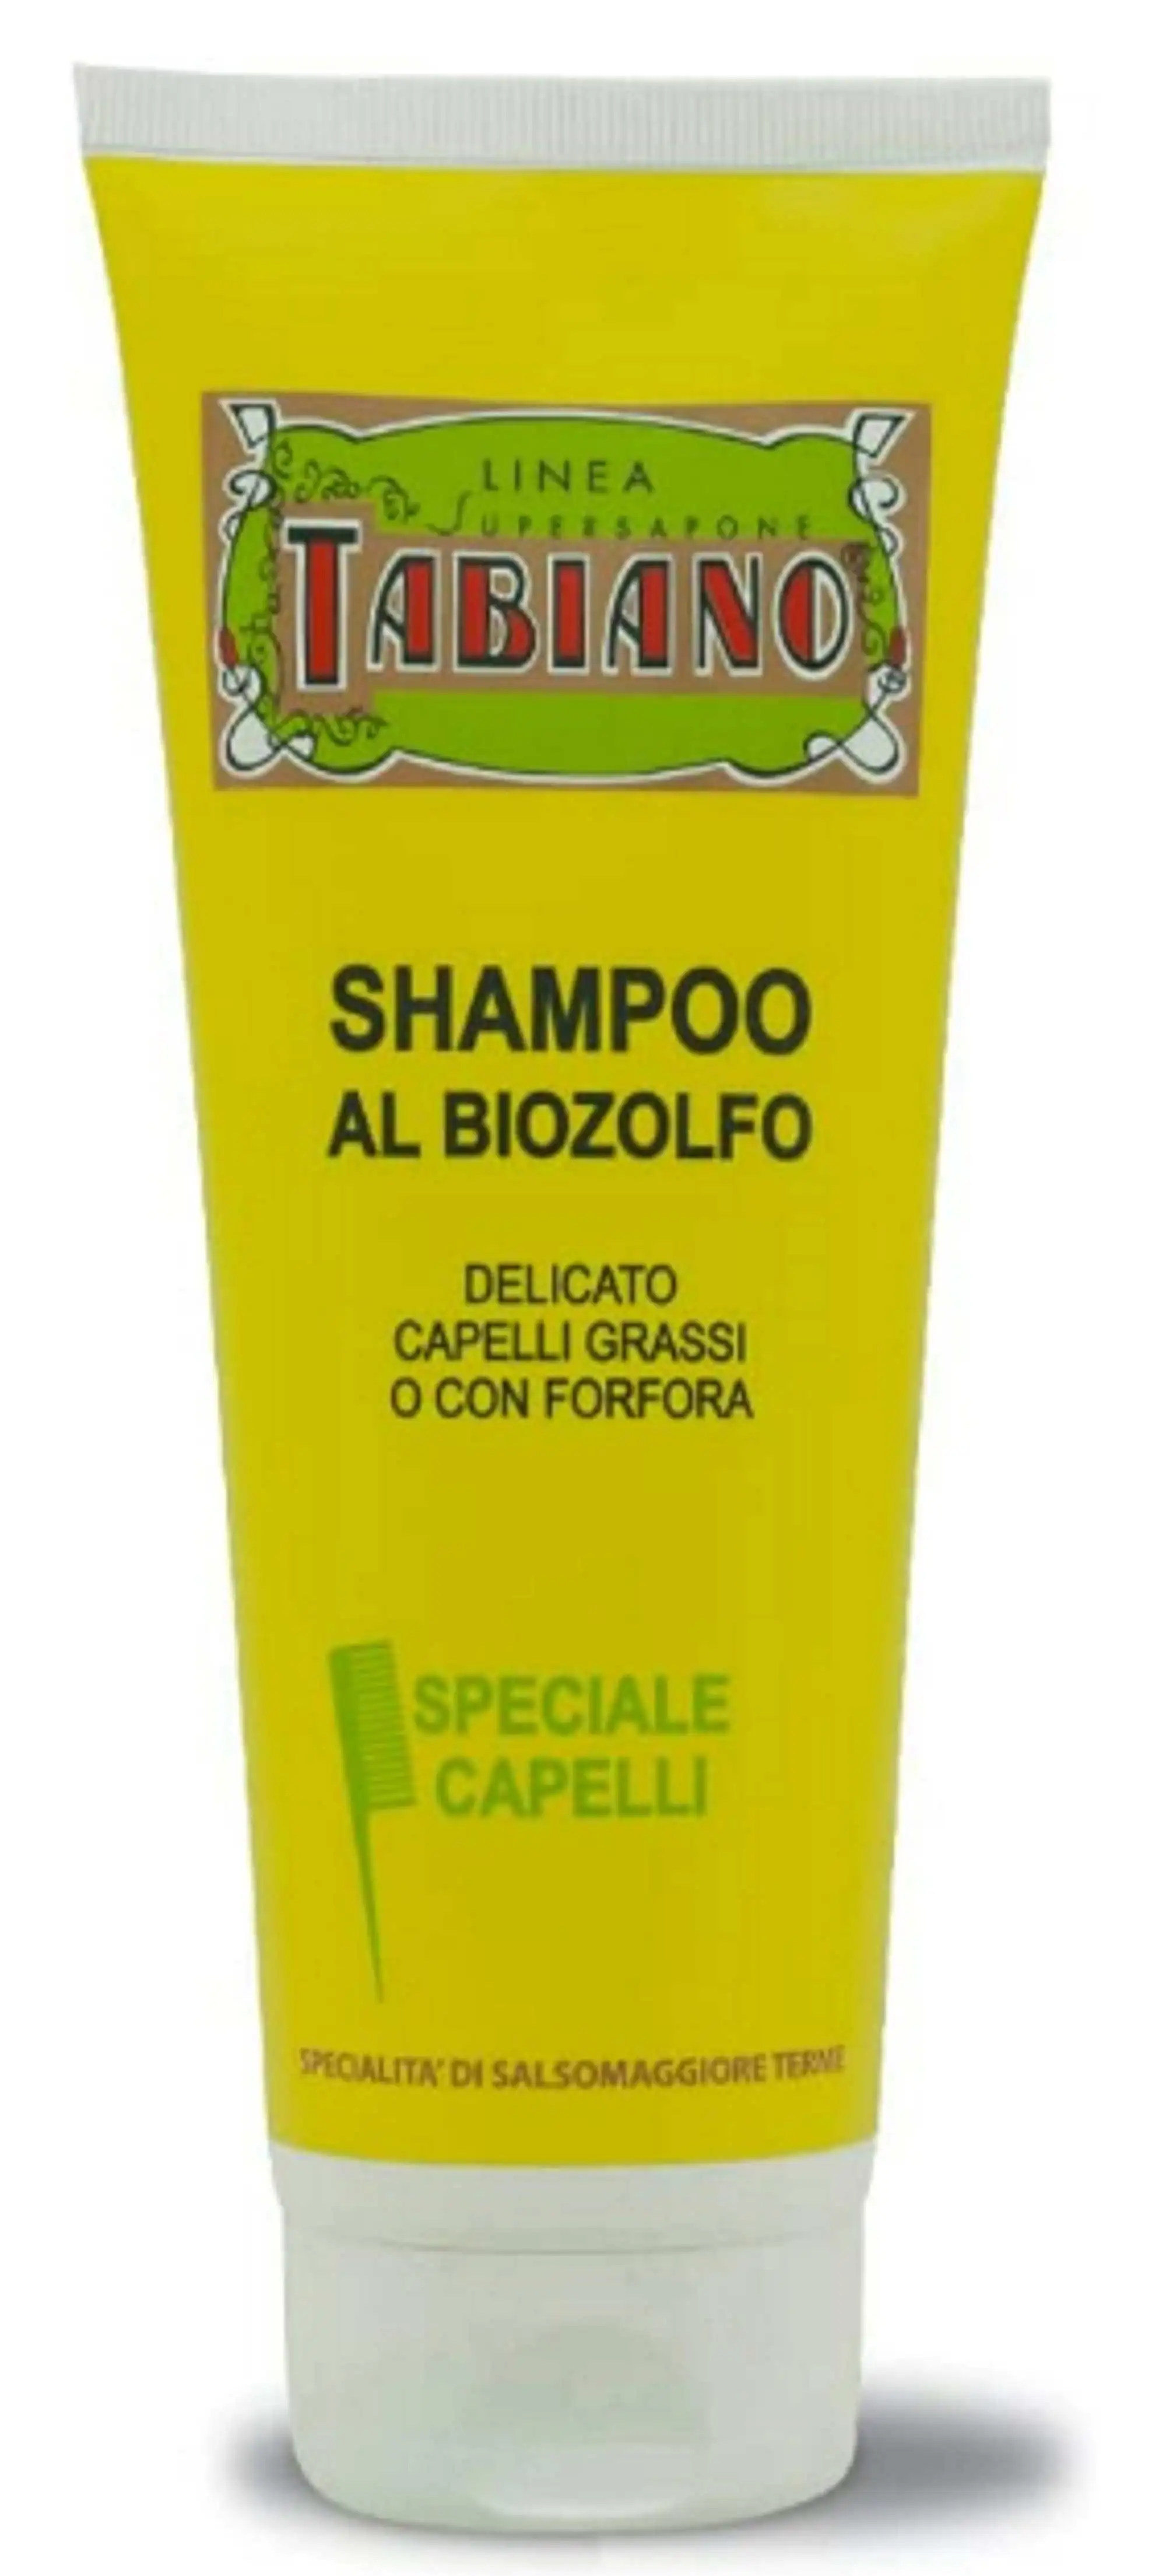 Shampoo al biozolfo